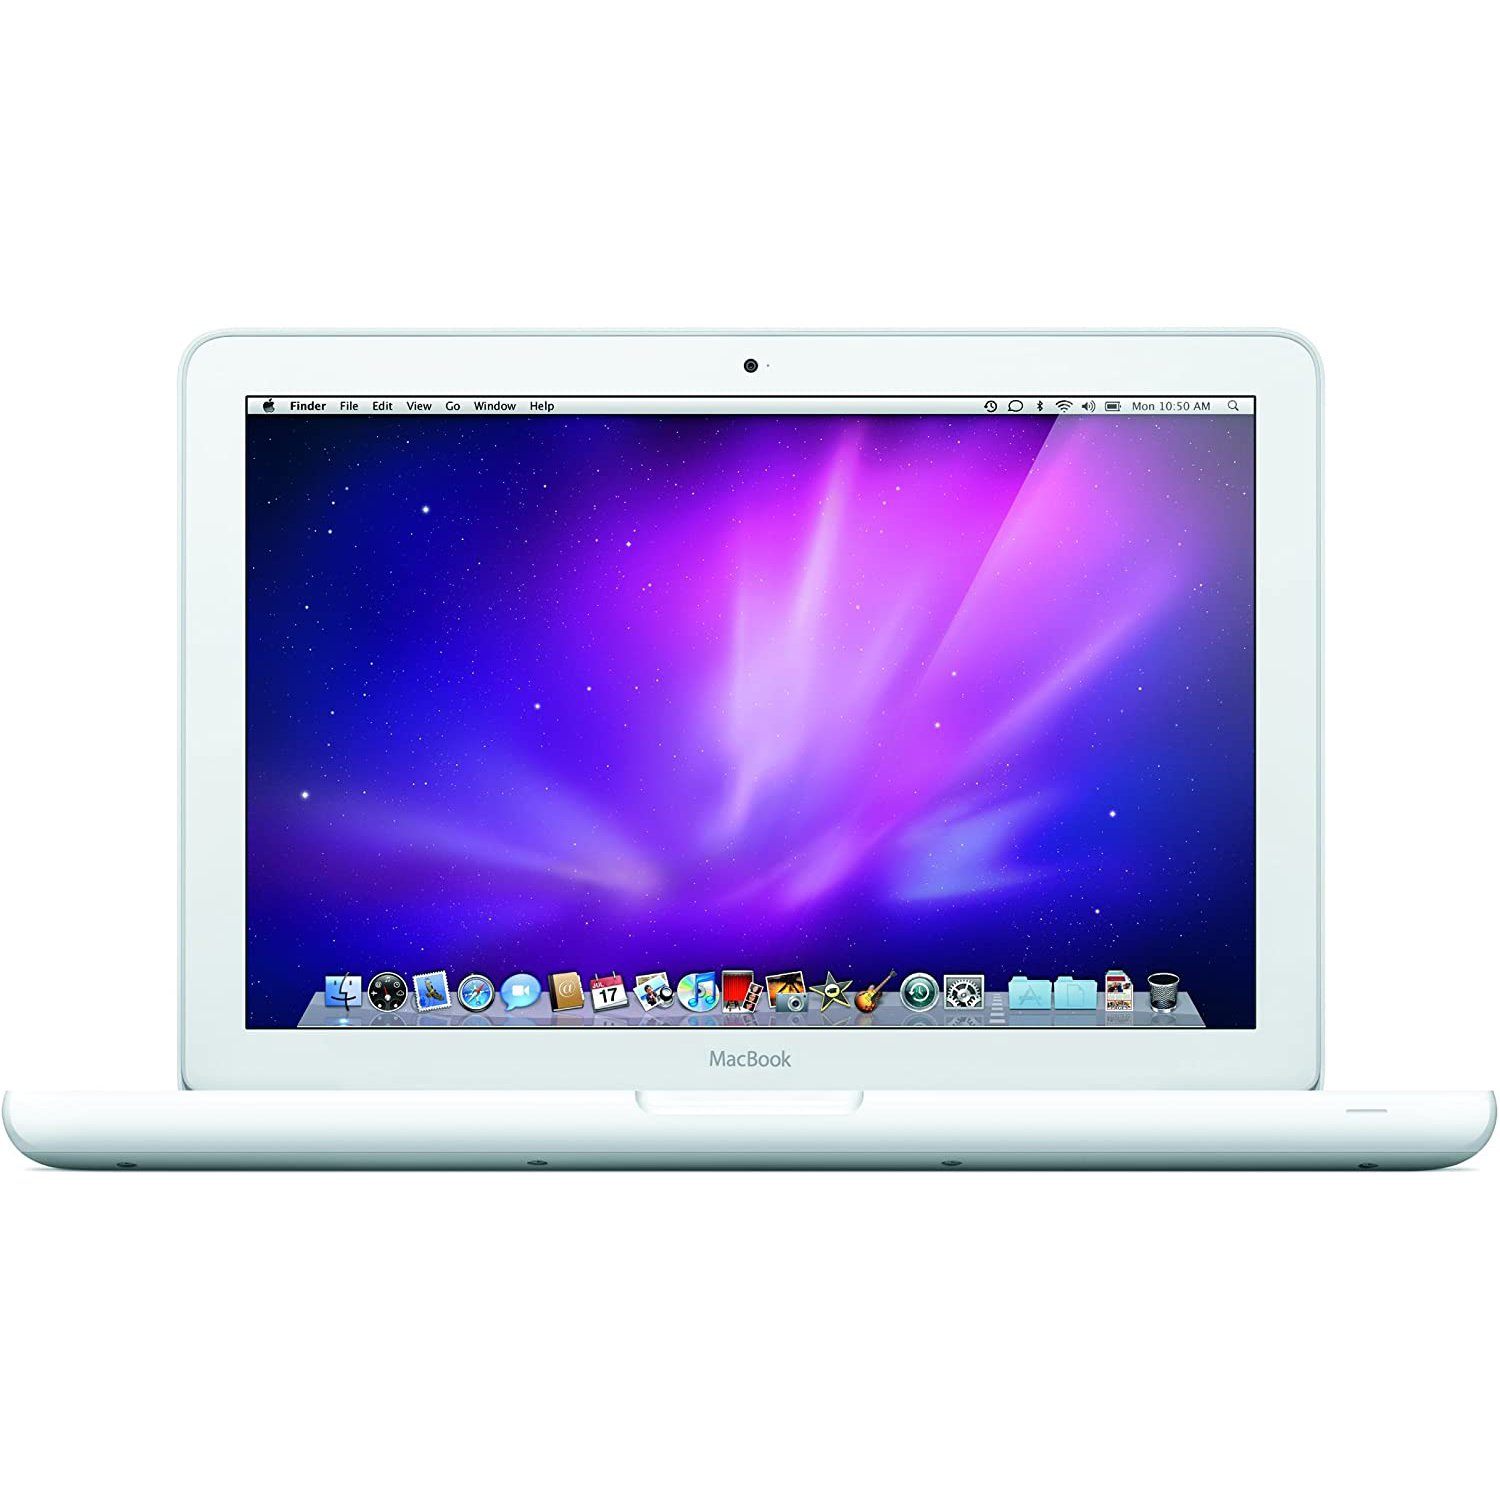 Apple MacBook MC207LL/A 13.3-Inch Laptop (Refurbished)